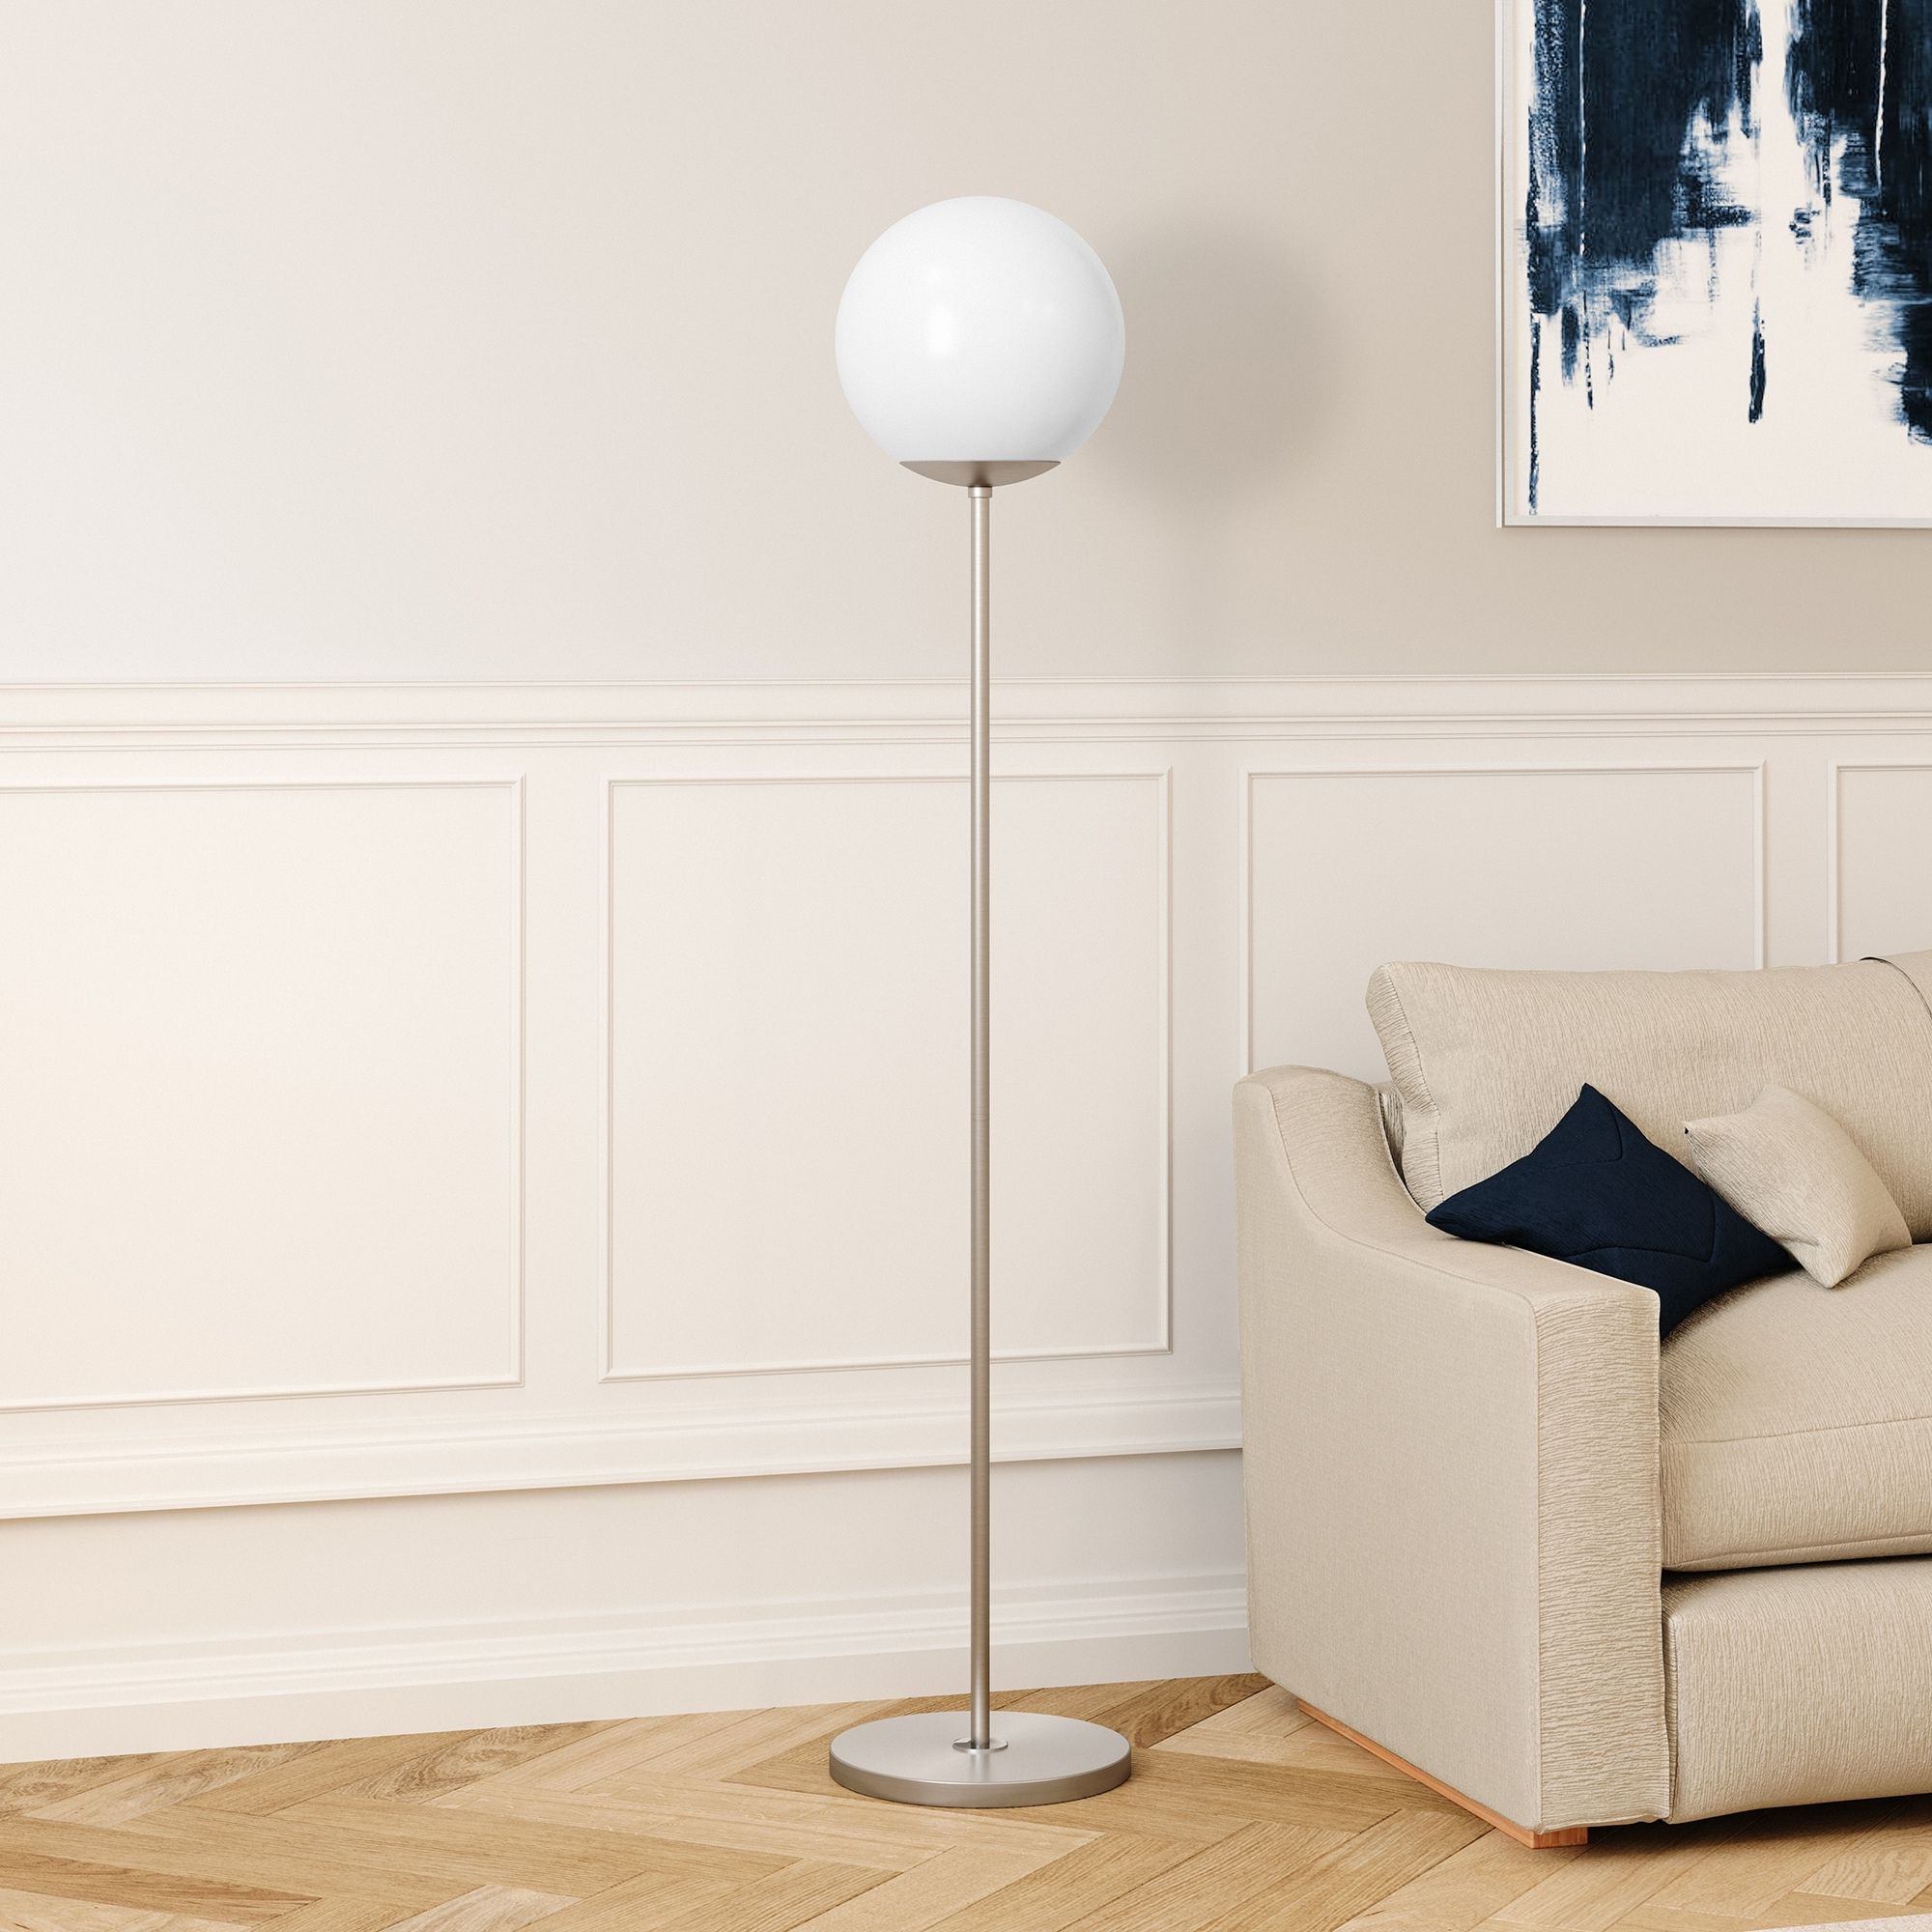 2020 Theia Globe Shade Floor Lamp – On Sale – Overstock – 23572461 Regarding Globe Standing Lamps (View 5 of 10)